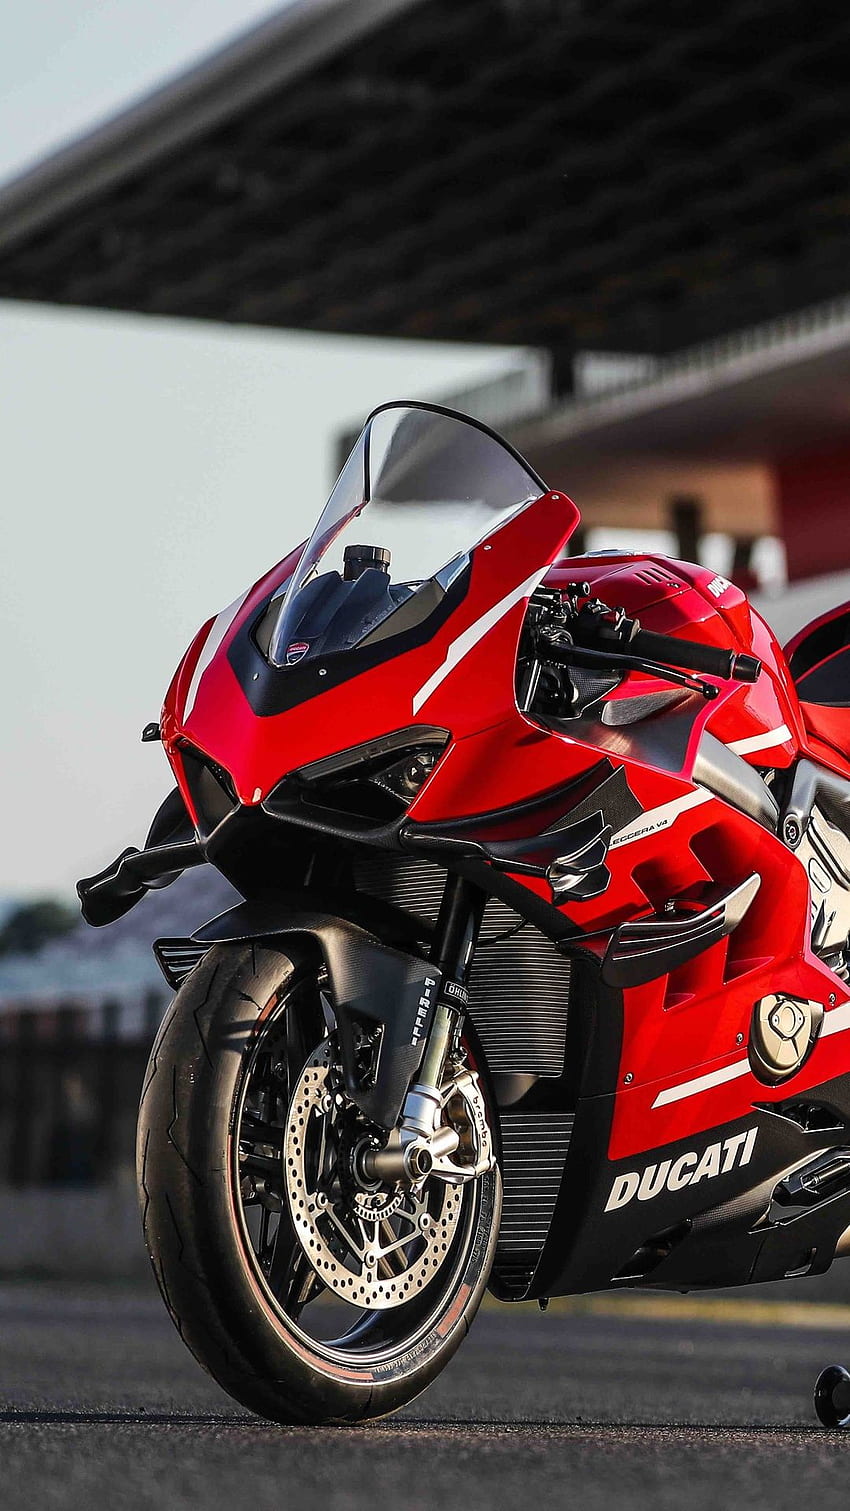 Ducati Superleggera V4 en resolución. Moto ducati, Ducati moto, Superleggera, Superbikes fondo de pantalla del teléfono